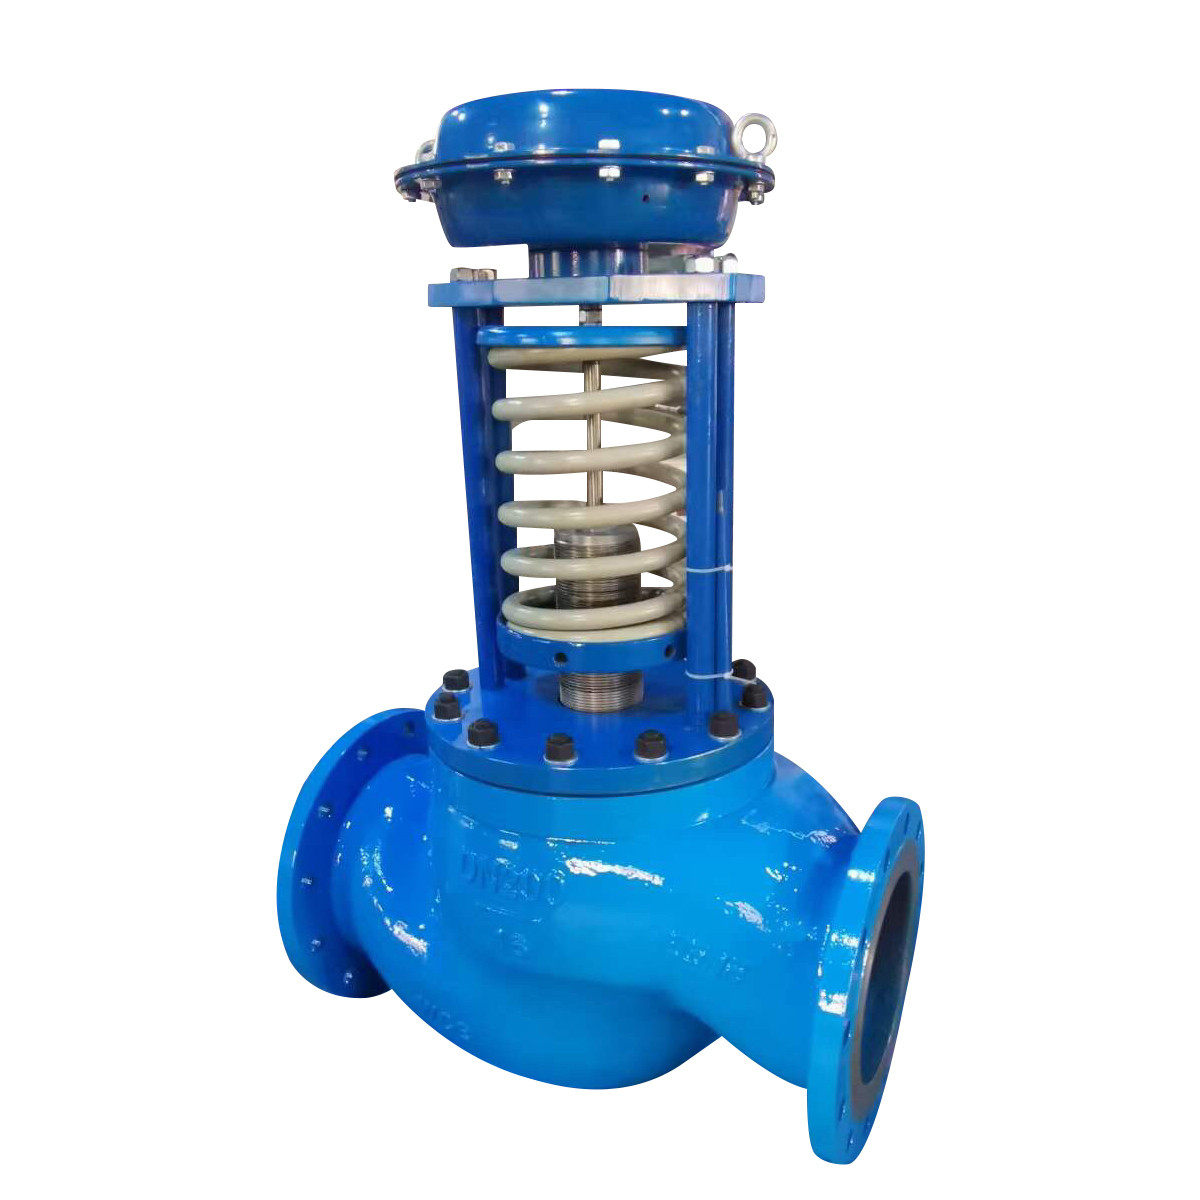 Pressure regulating valve for flow capacity 